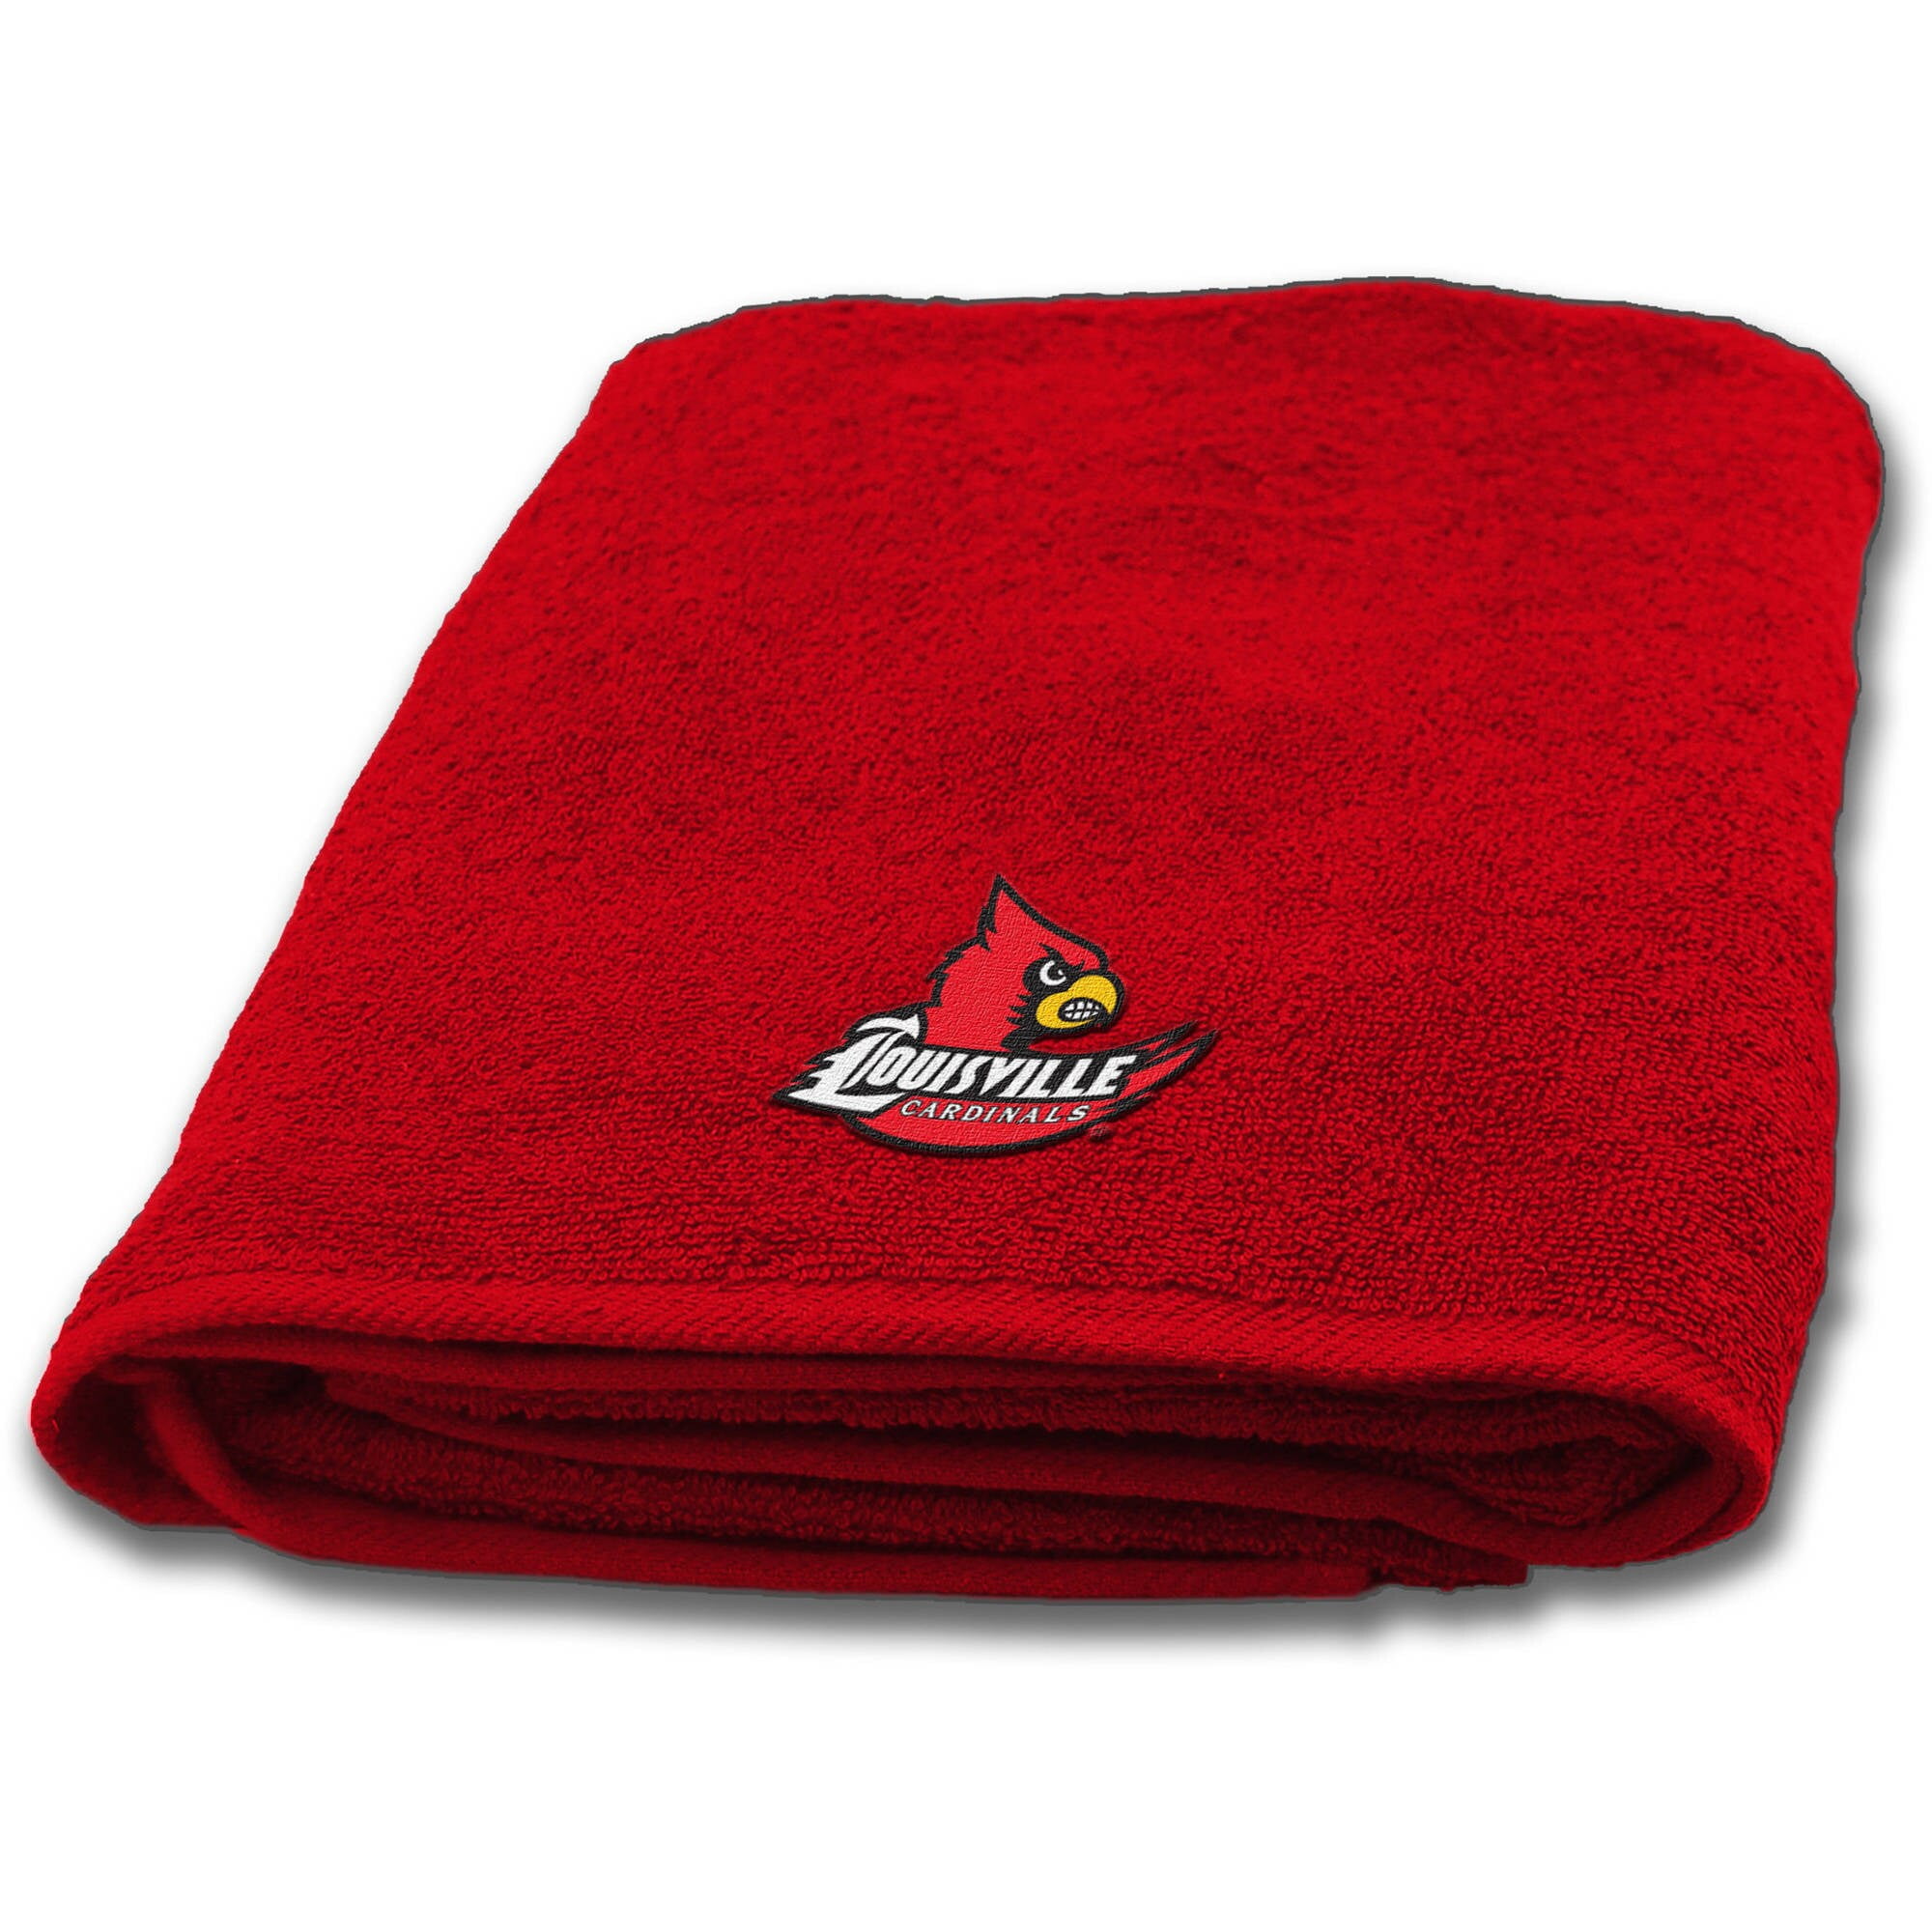 NCAA Louisville Cardinals Bath Towel 